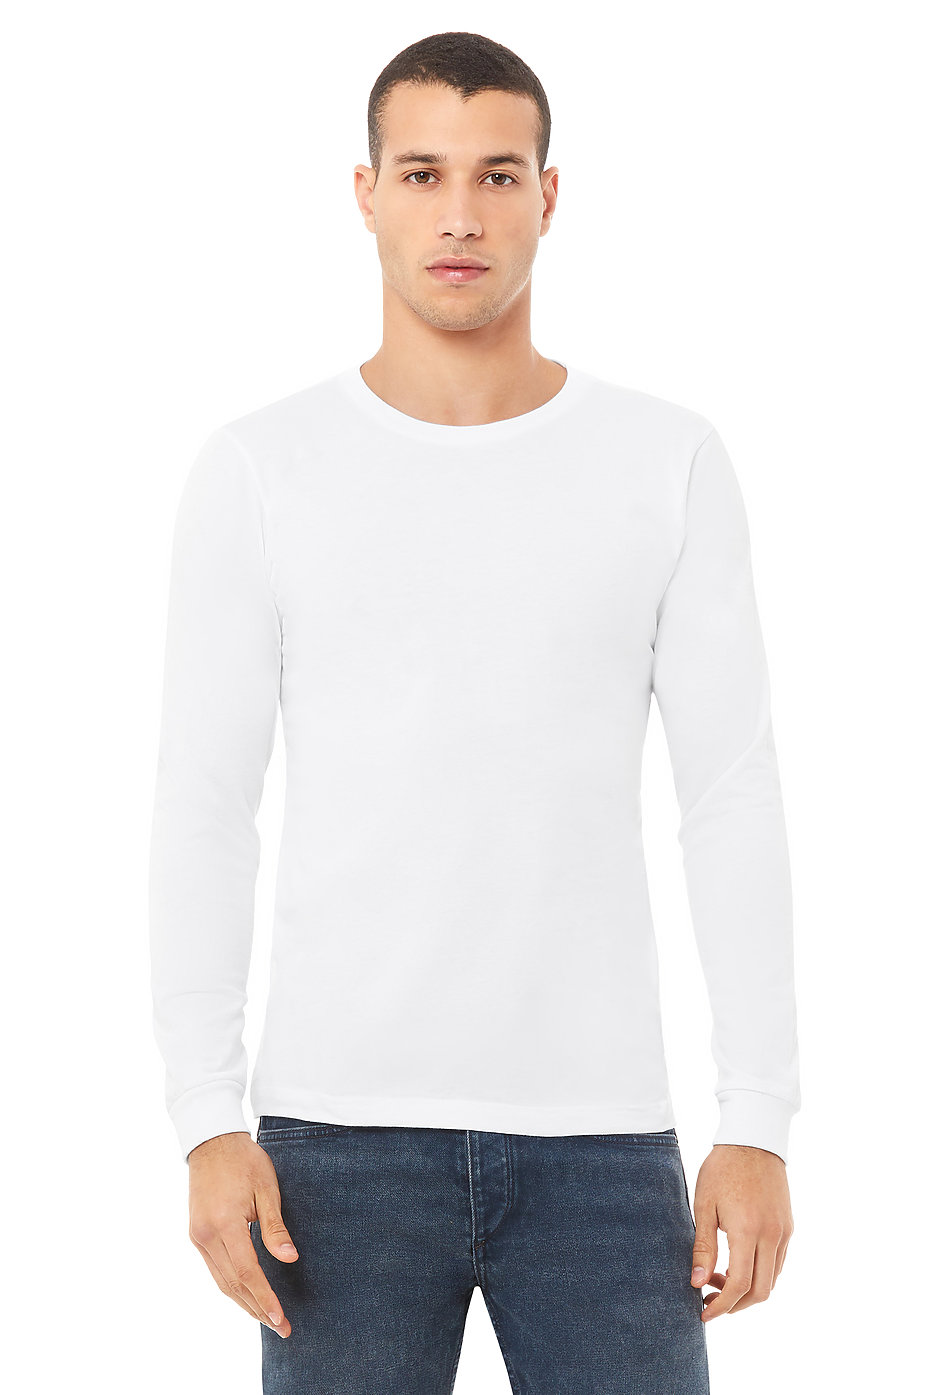 Long Sleeve T Shirts | Unisex Jersey 